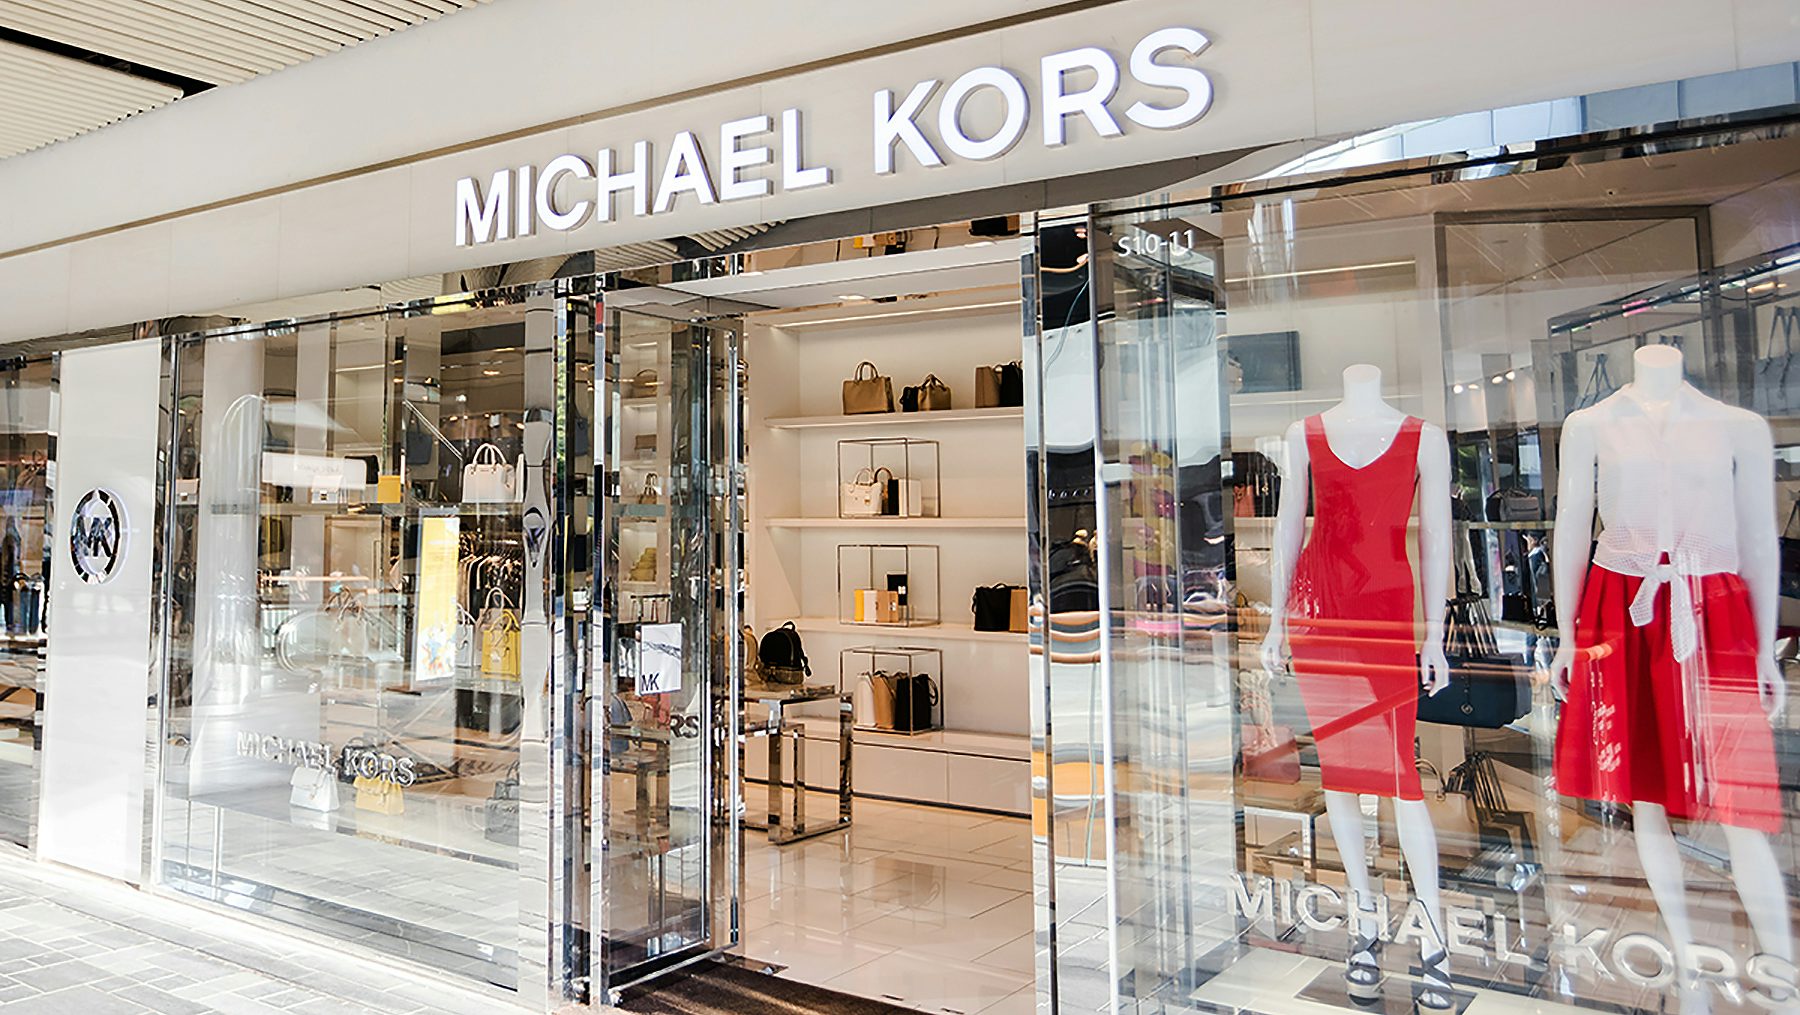 Michael Kors Hopes to Win Customers 